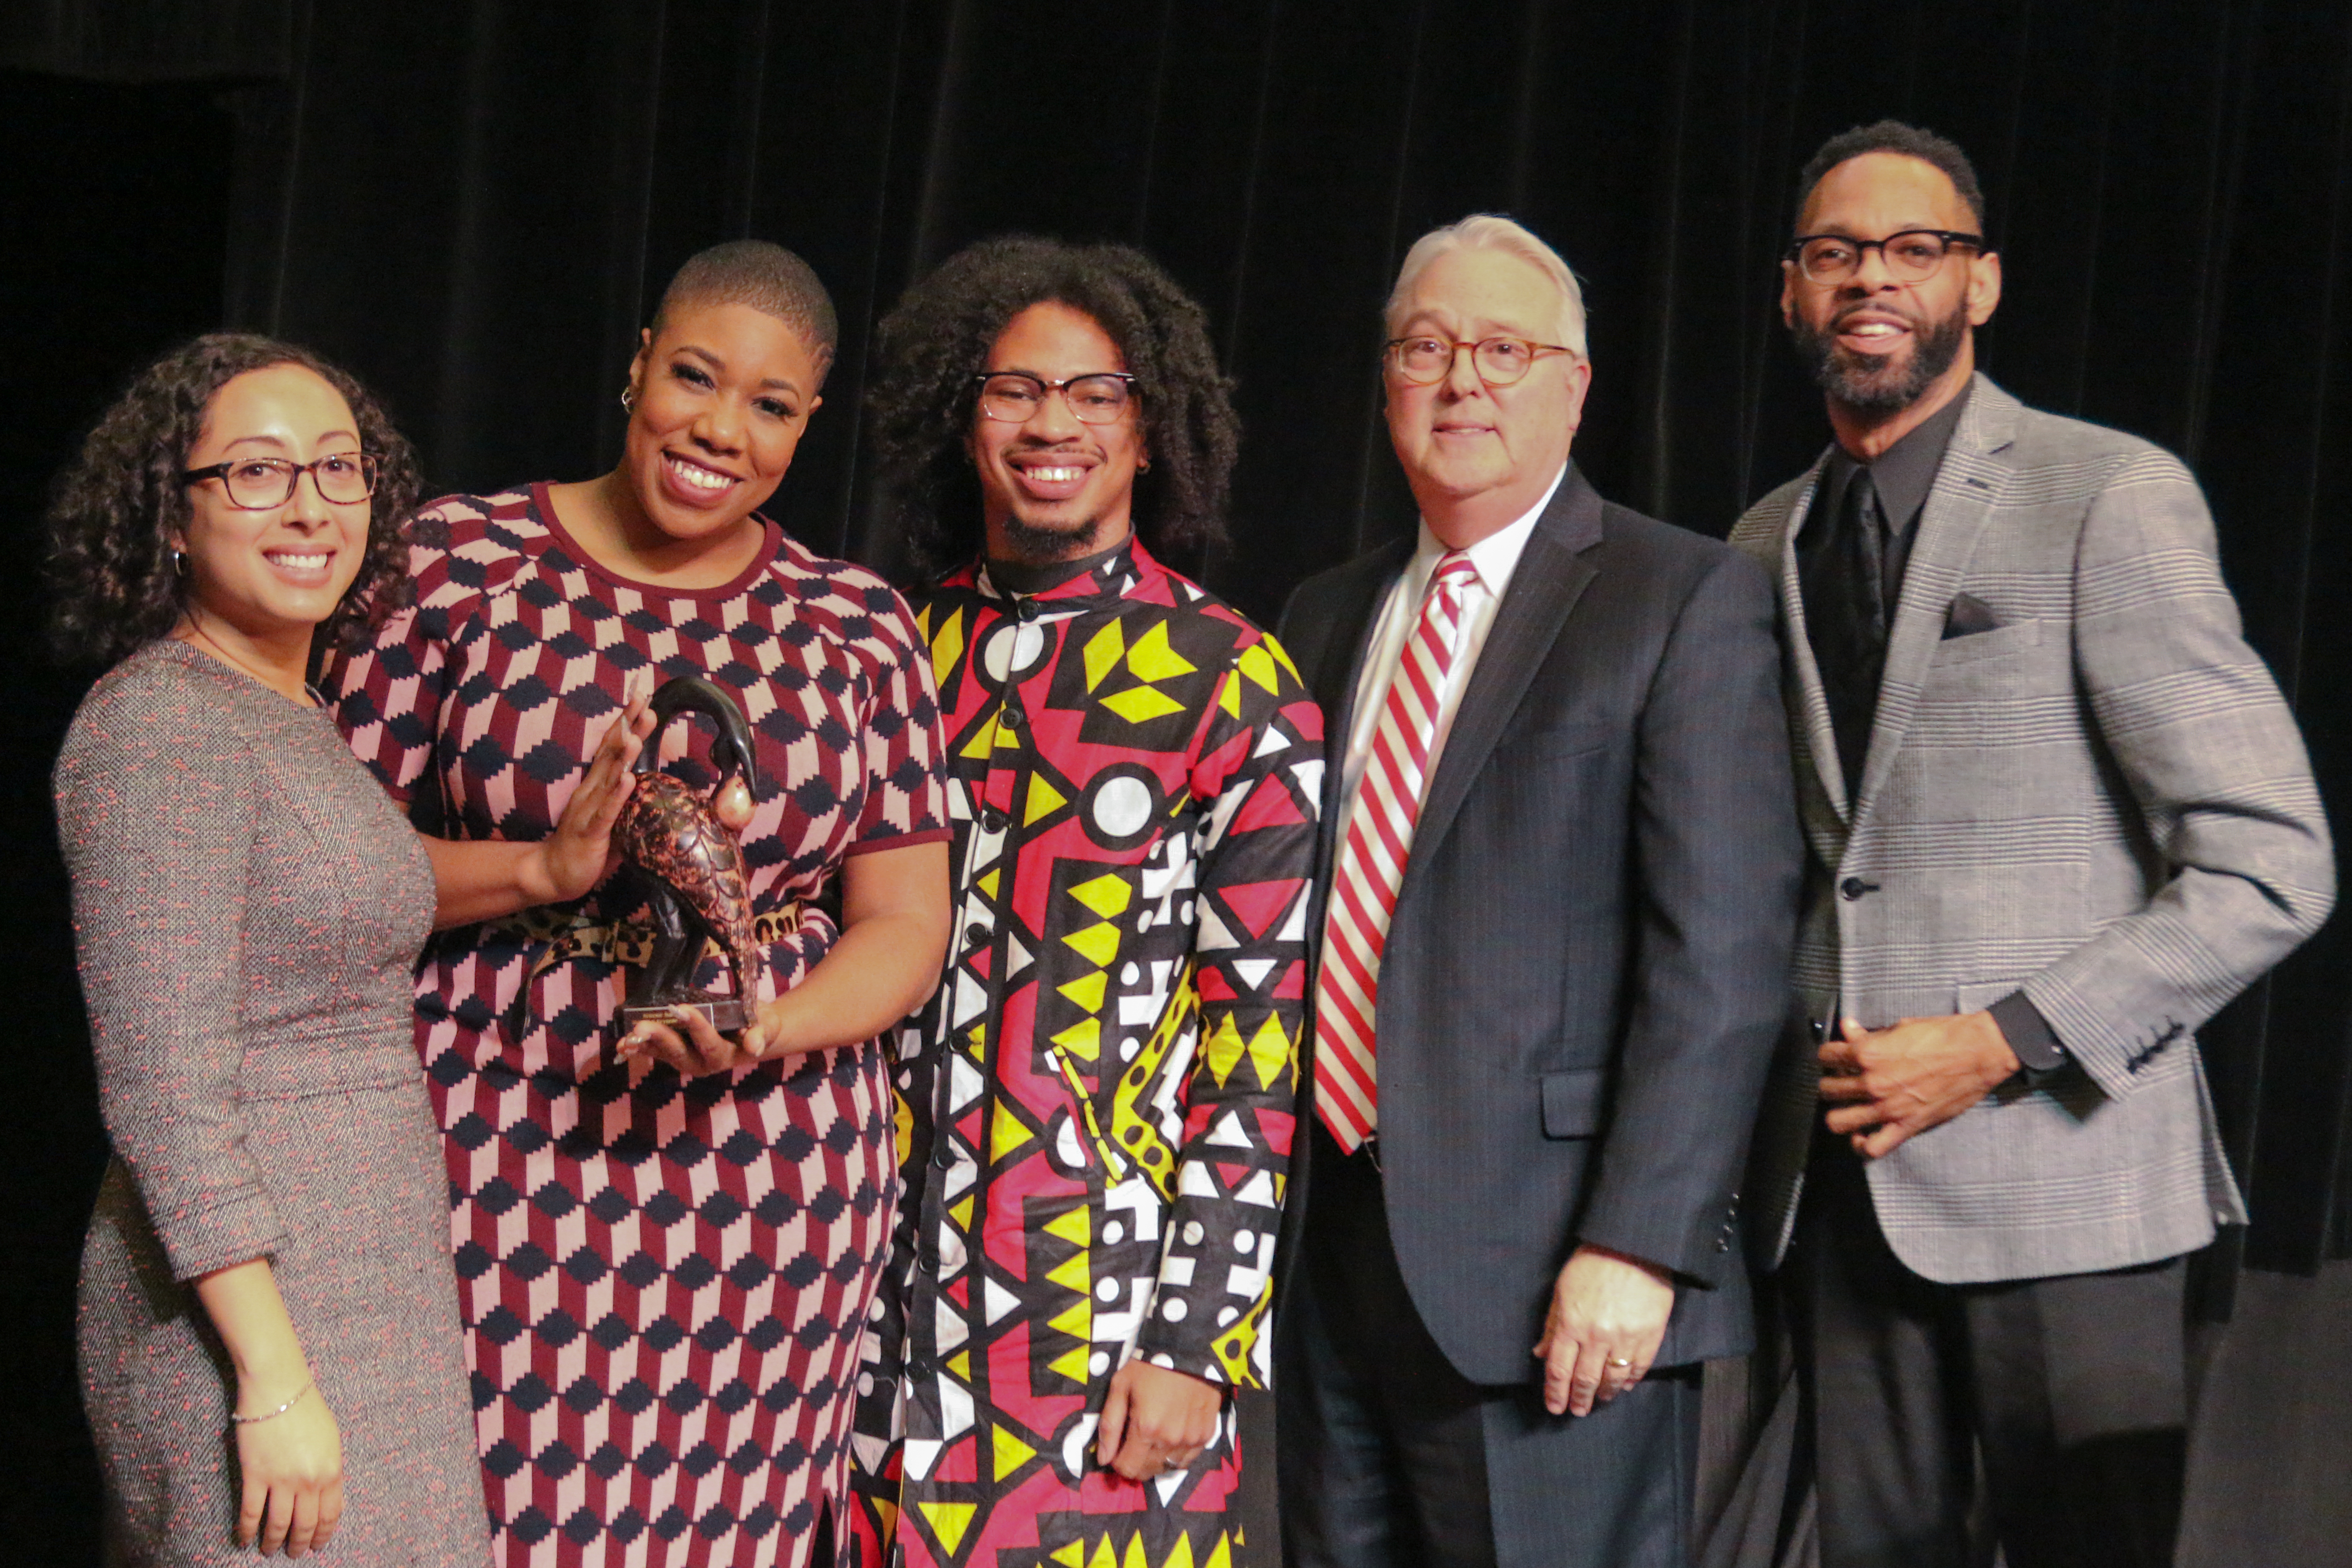 From left to right: Dr. Sachelle Ford, Symone Sanders, John Miller IV, Chancellor Randy Woodson, Moses T. Alexander Greene (Shanmukha Sandesh/Nubian Message)